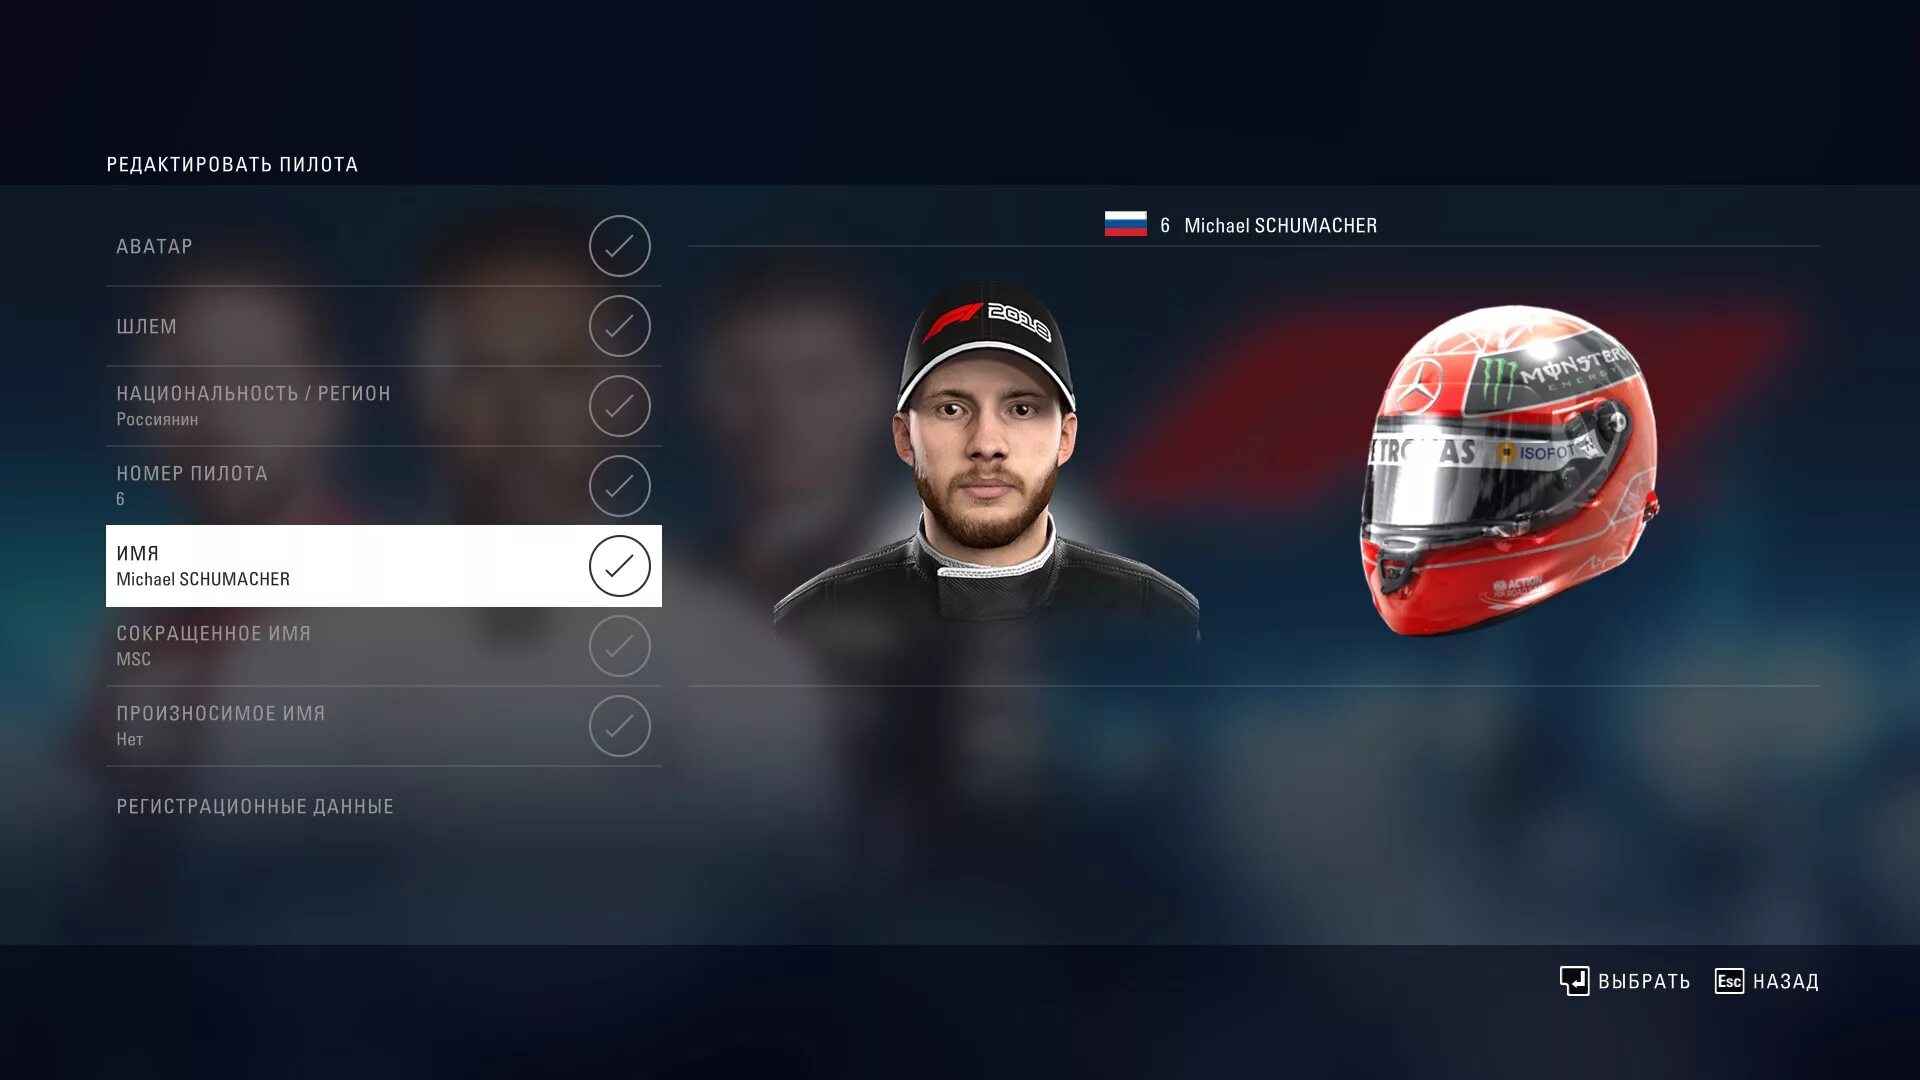 1 2018 ru. F1 2018 шлемы для карьеры. Михаэль Шумахер - "красный Барон" обложка. Шлем Михаэля Шумахера.